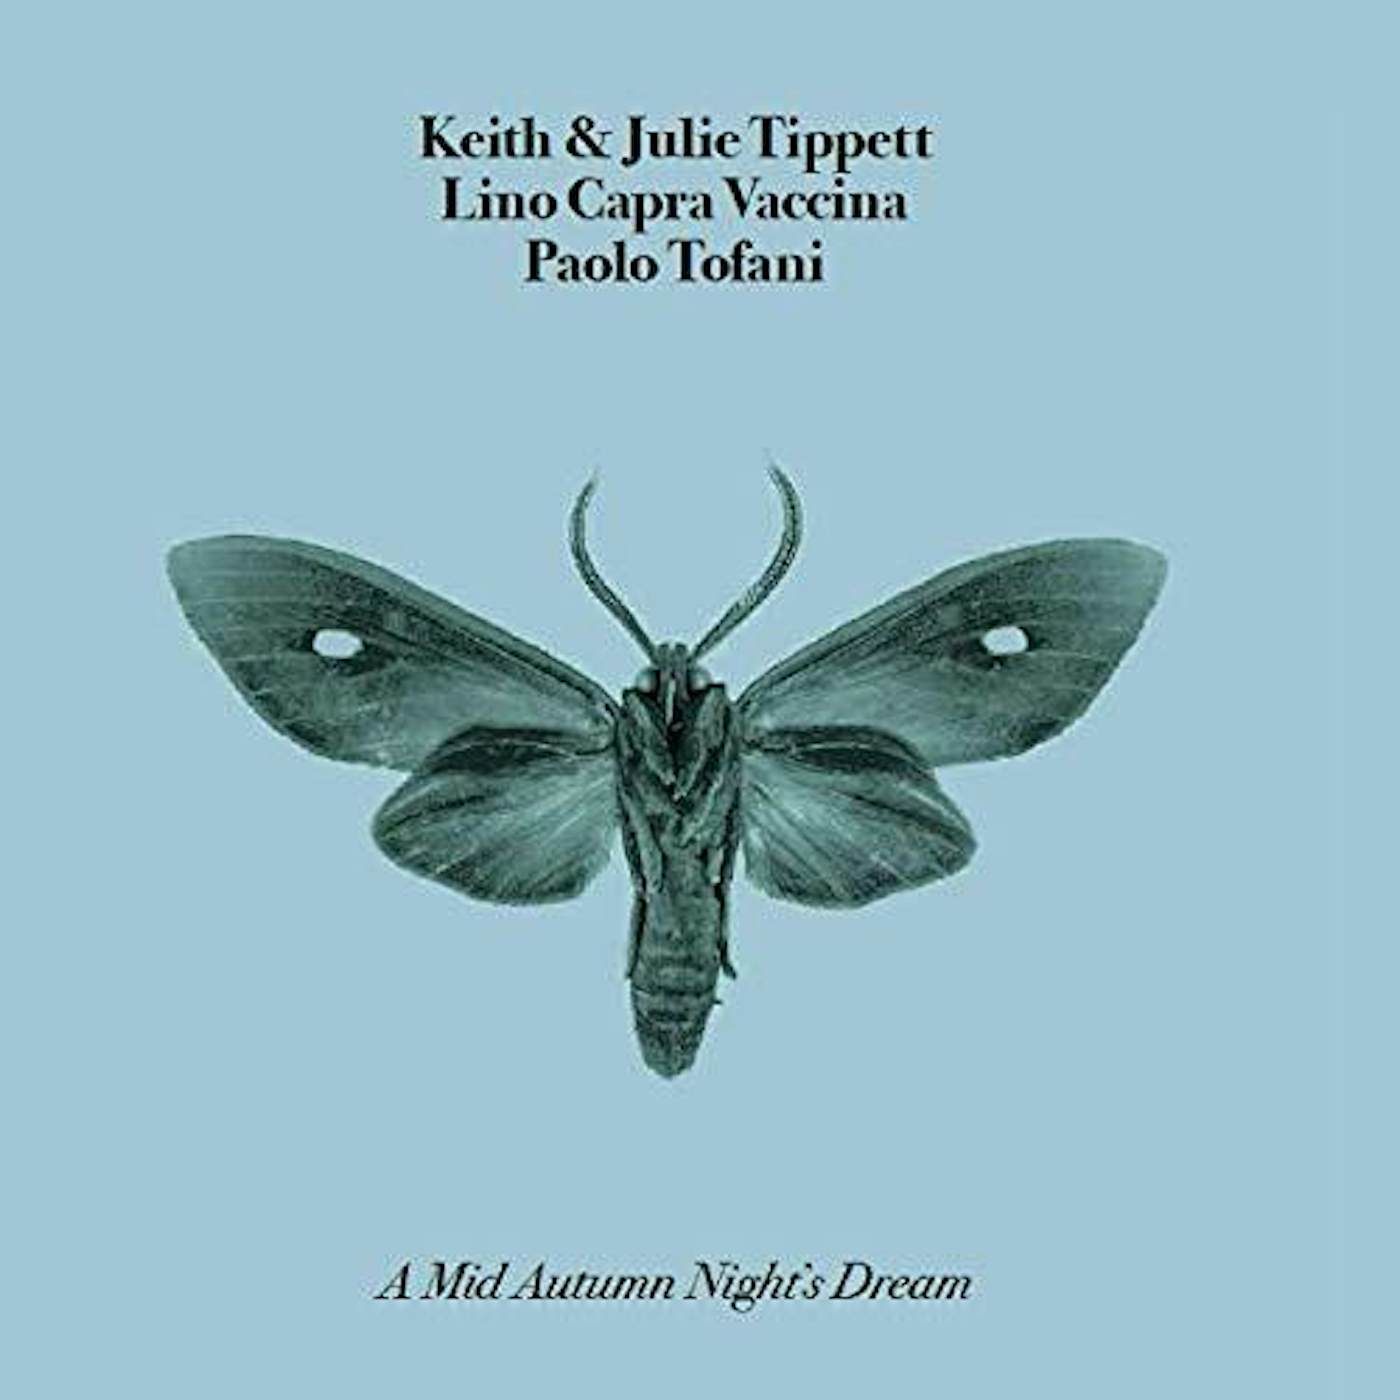 Tippett / Capra Vaccina / Tofani MID AUTUMN NIGHT'S DREAM CD